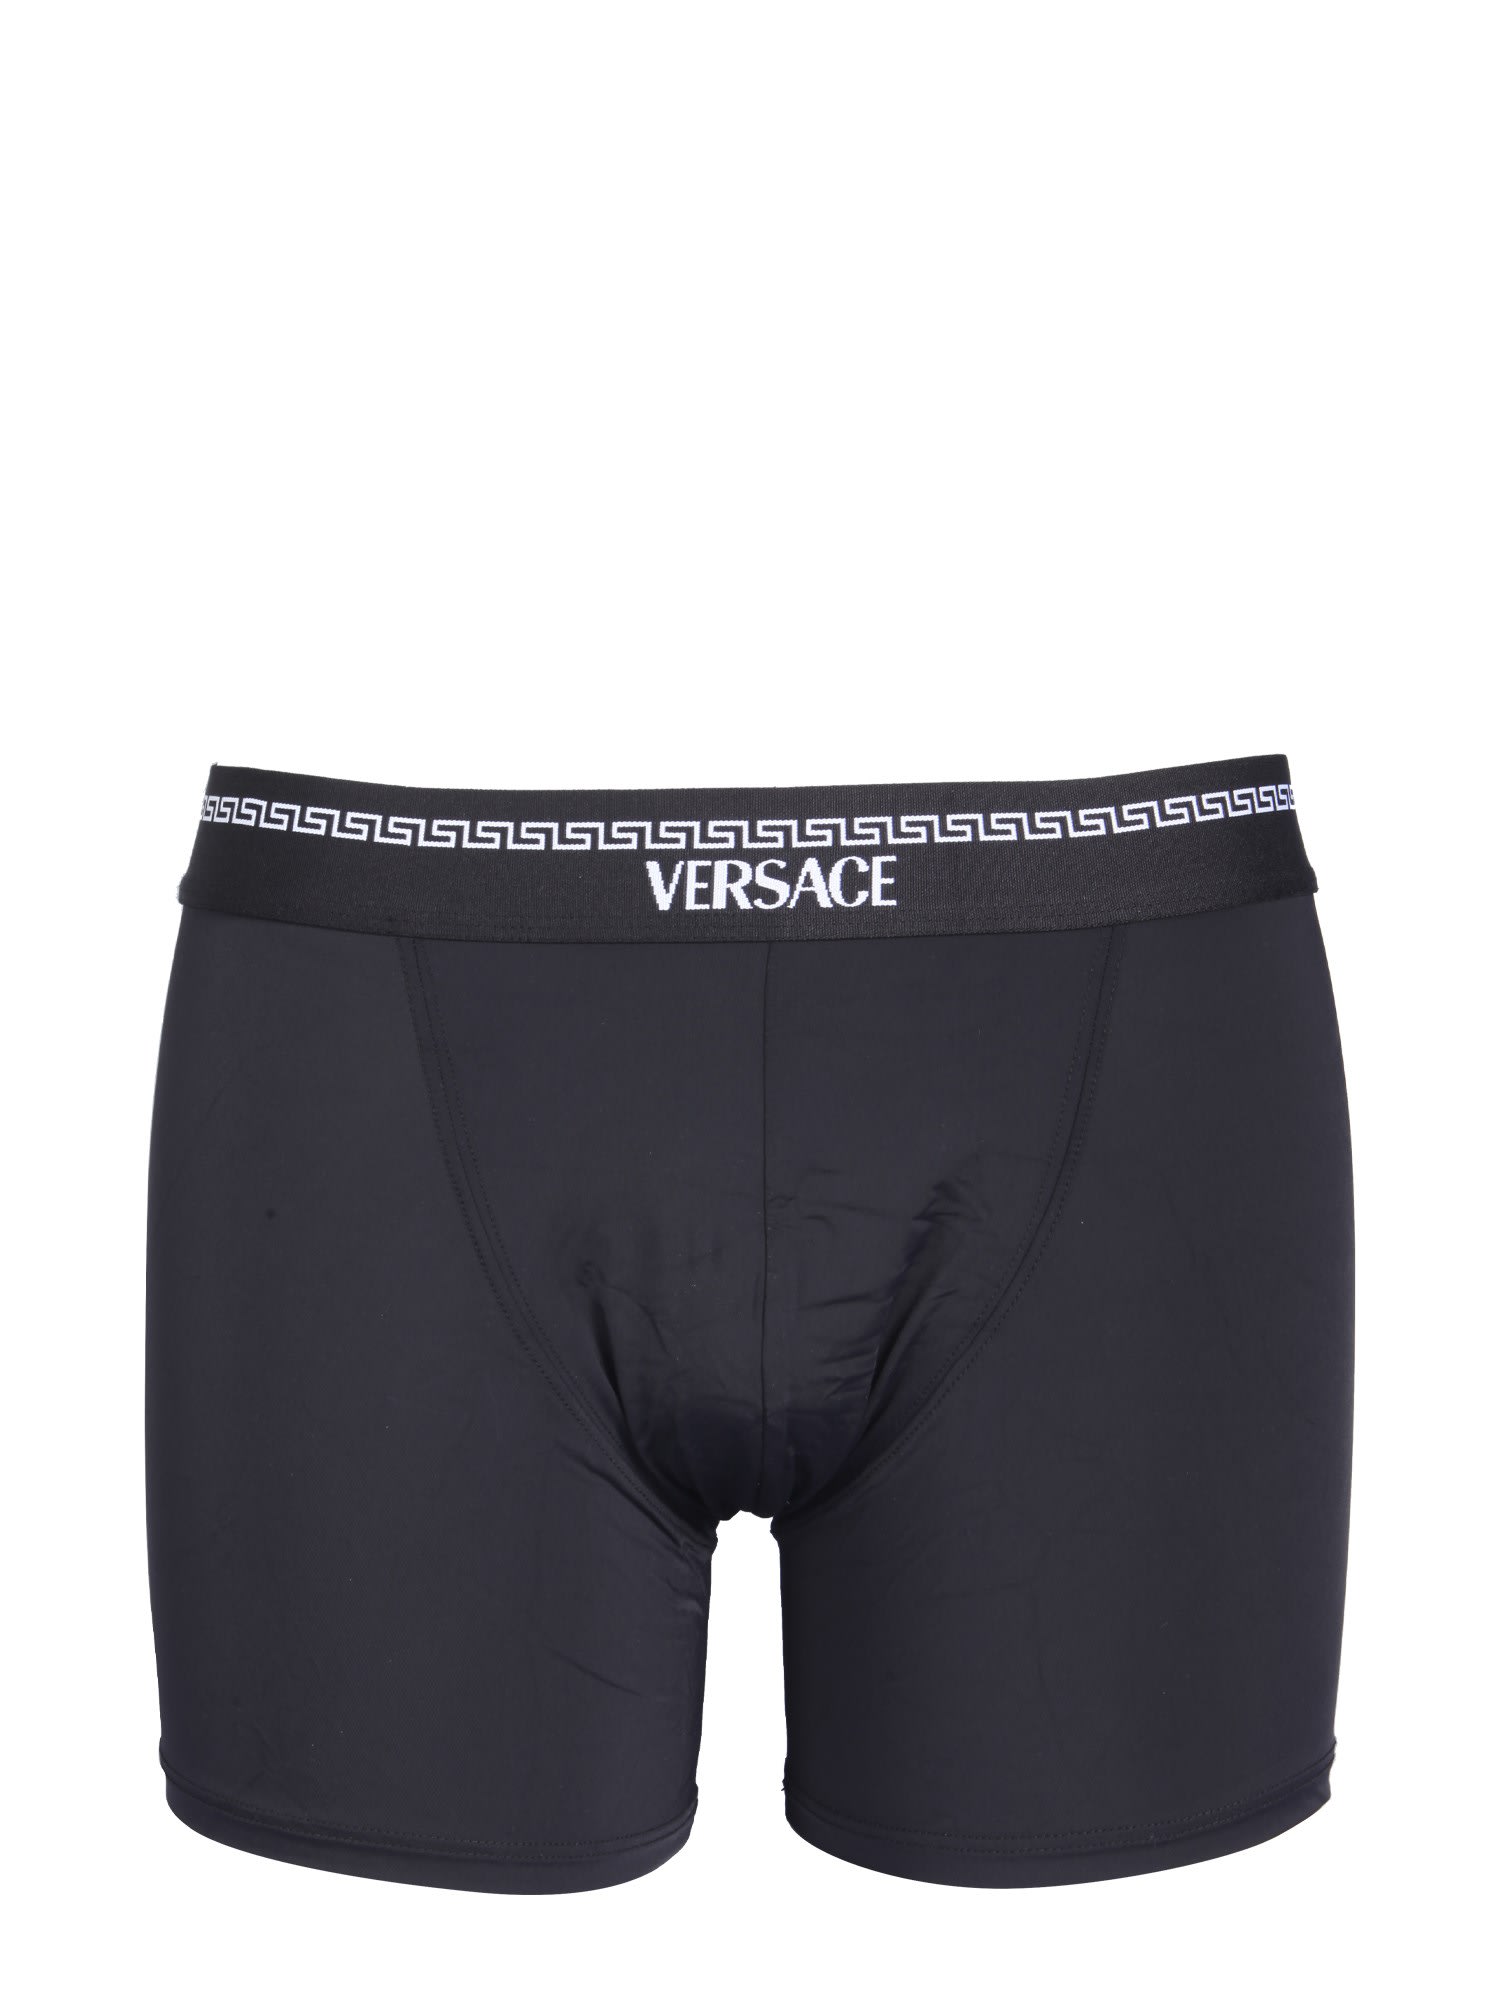 Versace Boxer Greek Shorts